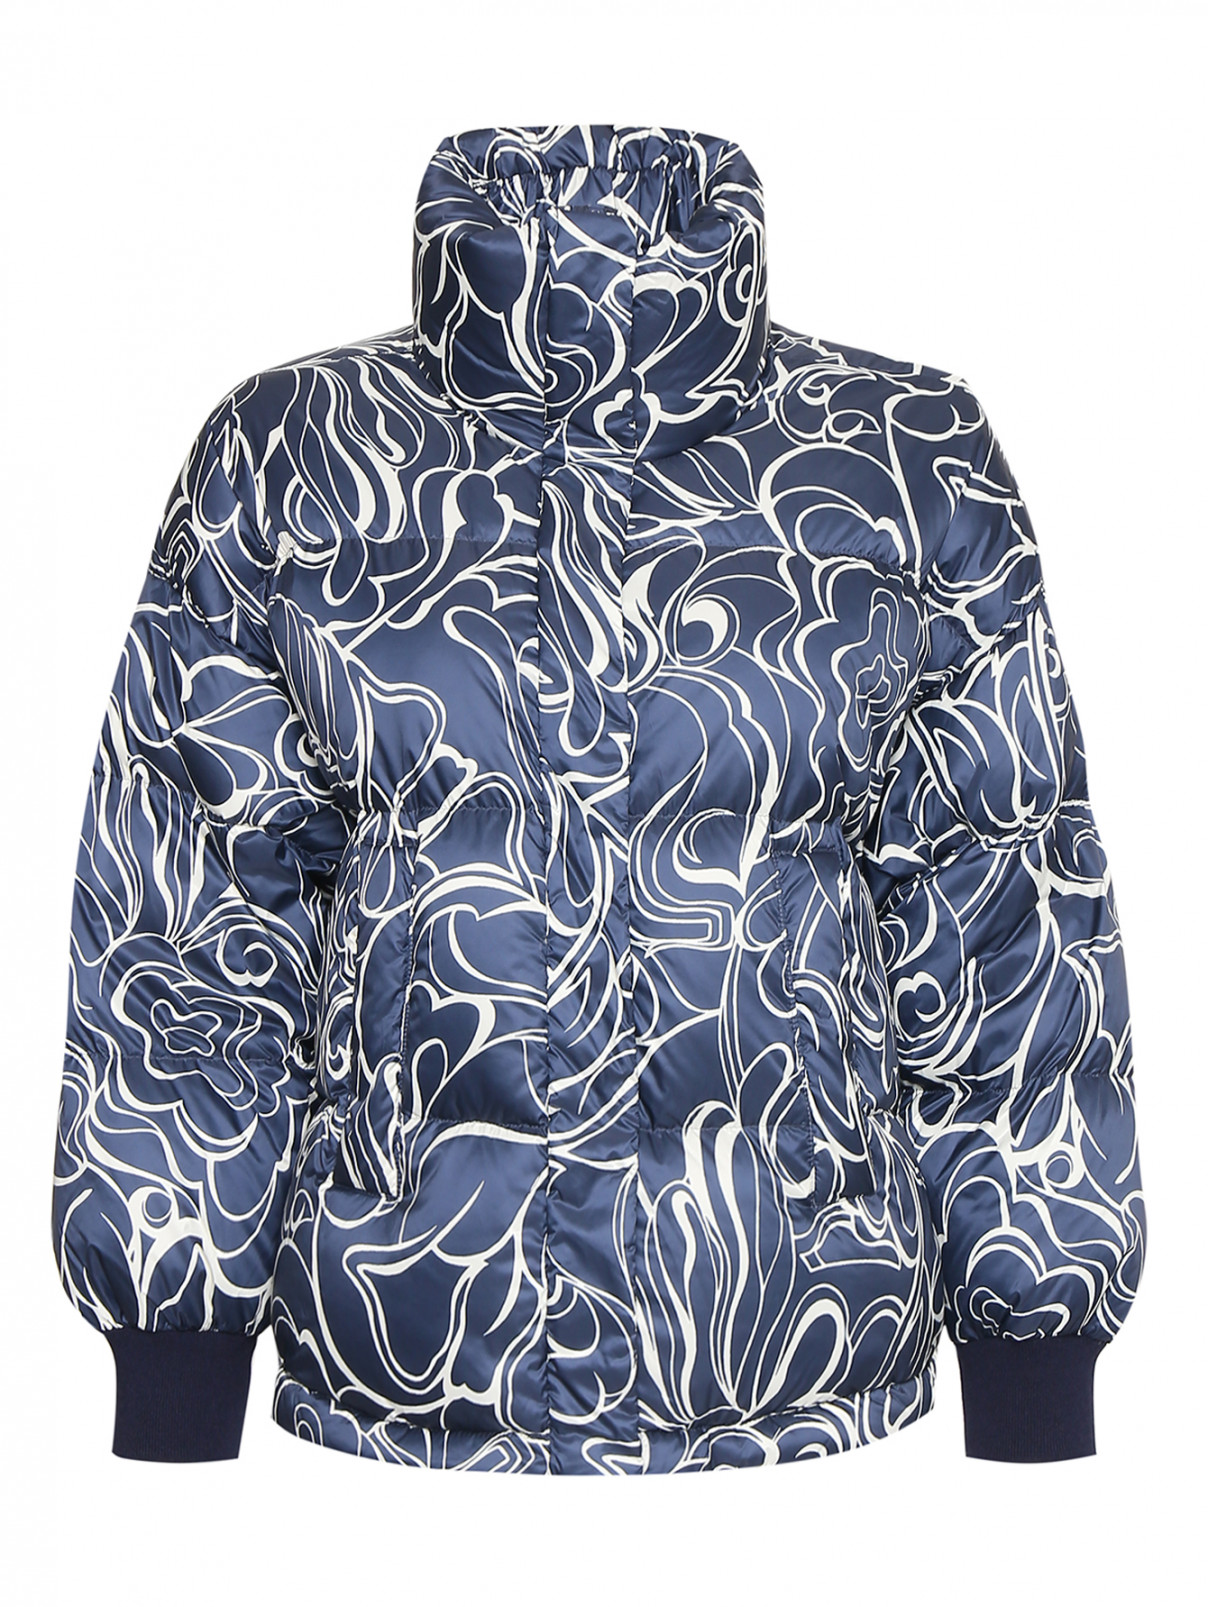 Куртка пуховая с узором Weekend Max Mara  –  Общий вид  – Цвет:  Синий